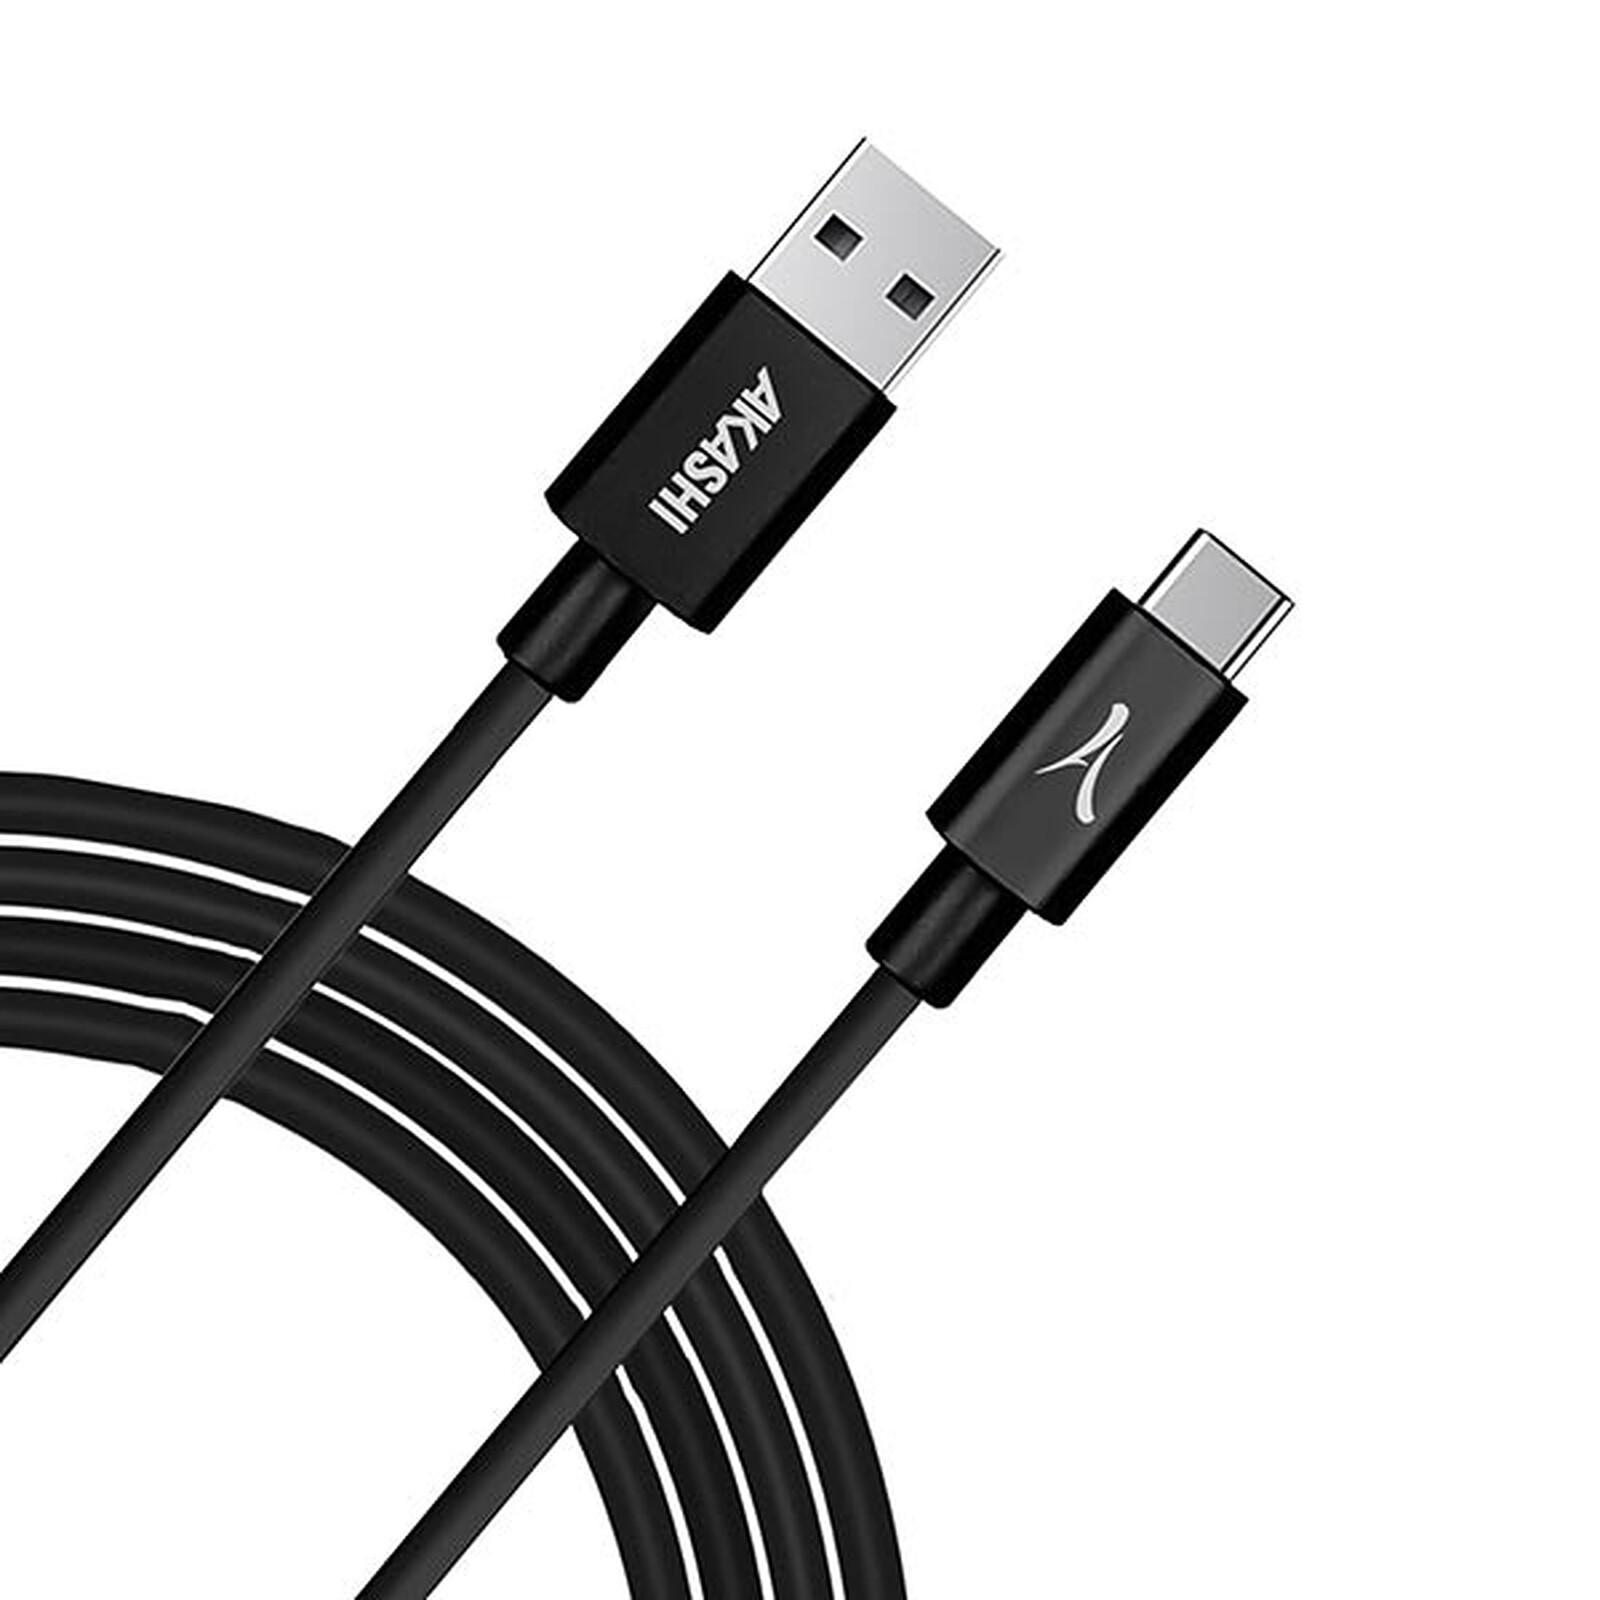 Cable USB-A a Micro-USB Belkin (negro) - 1m - Cable y Adaptador - LDLC